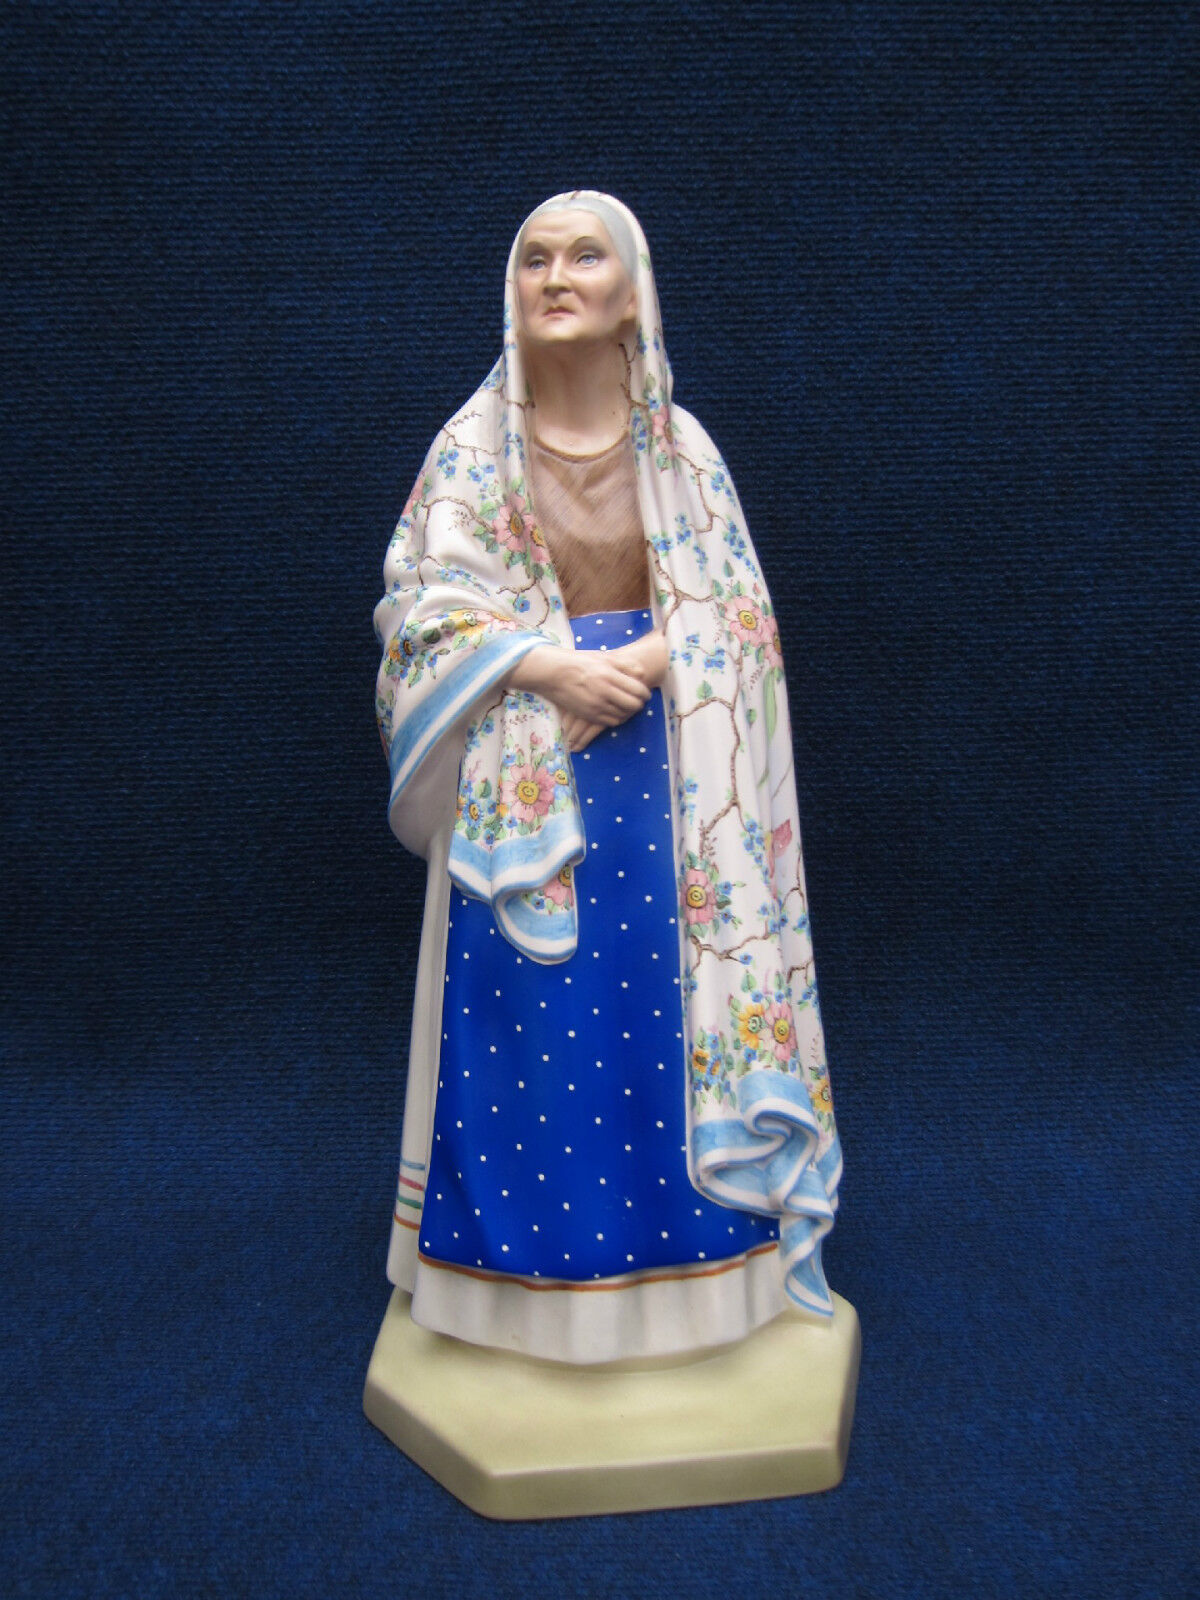 Ceramic statue Lenci older Lady in typical dress signed & impressed marks, label